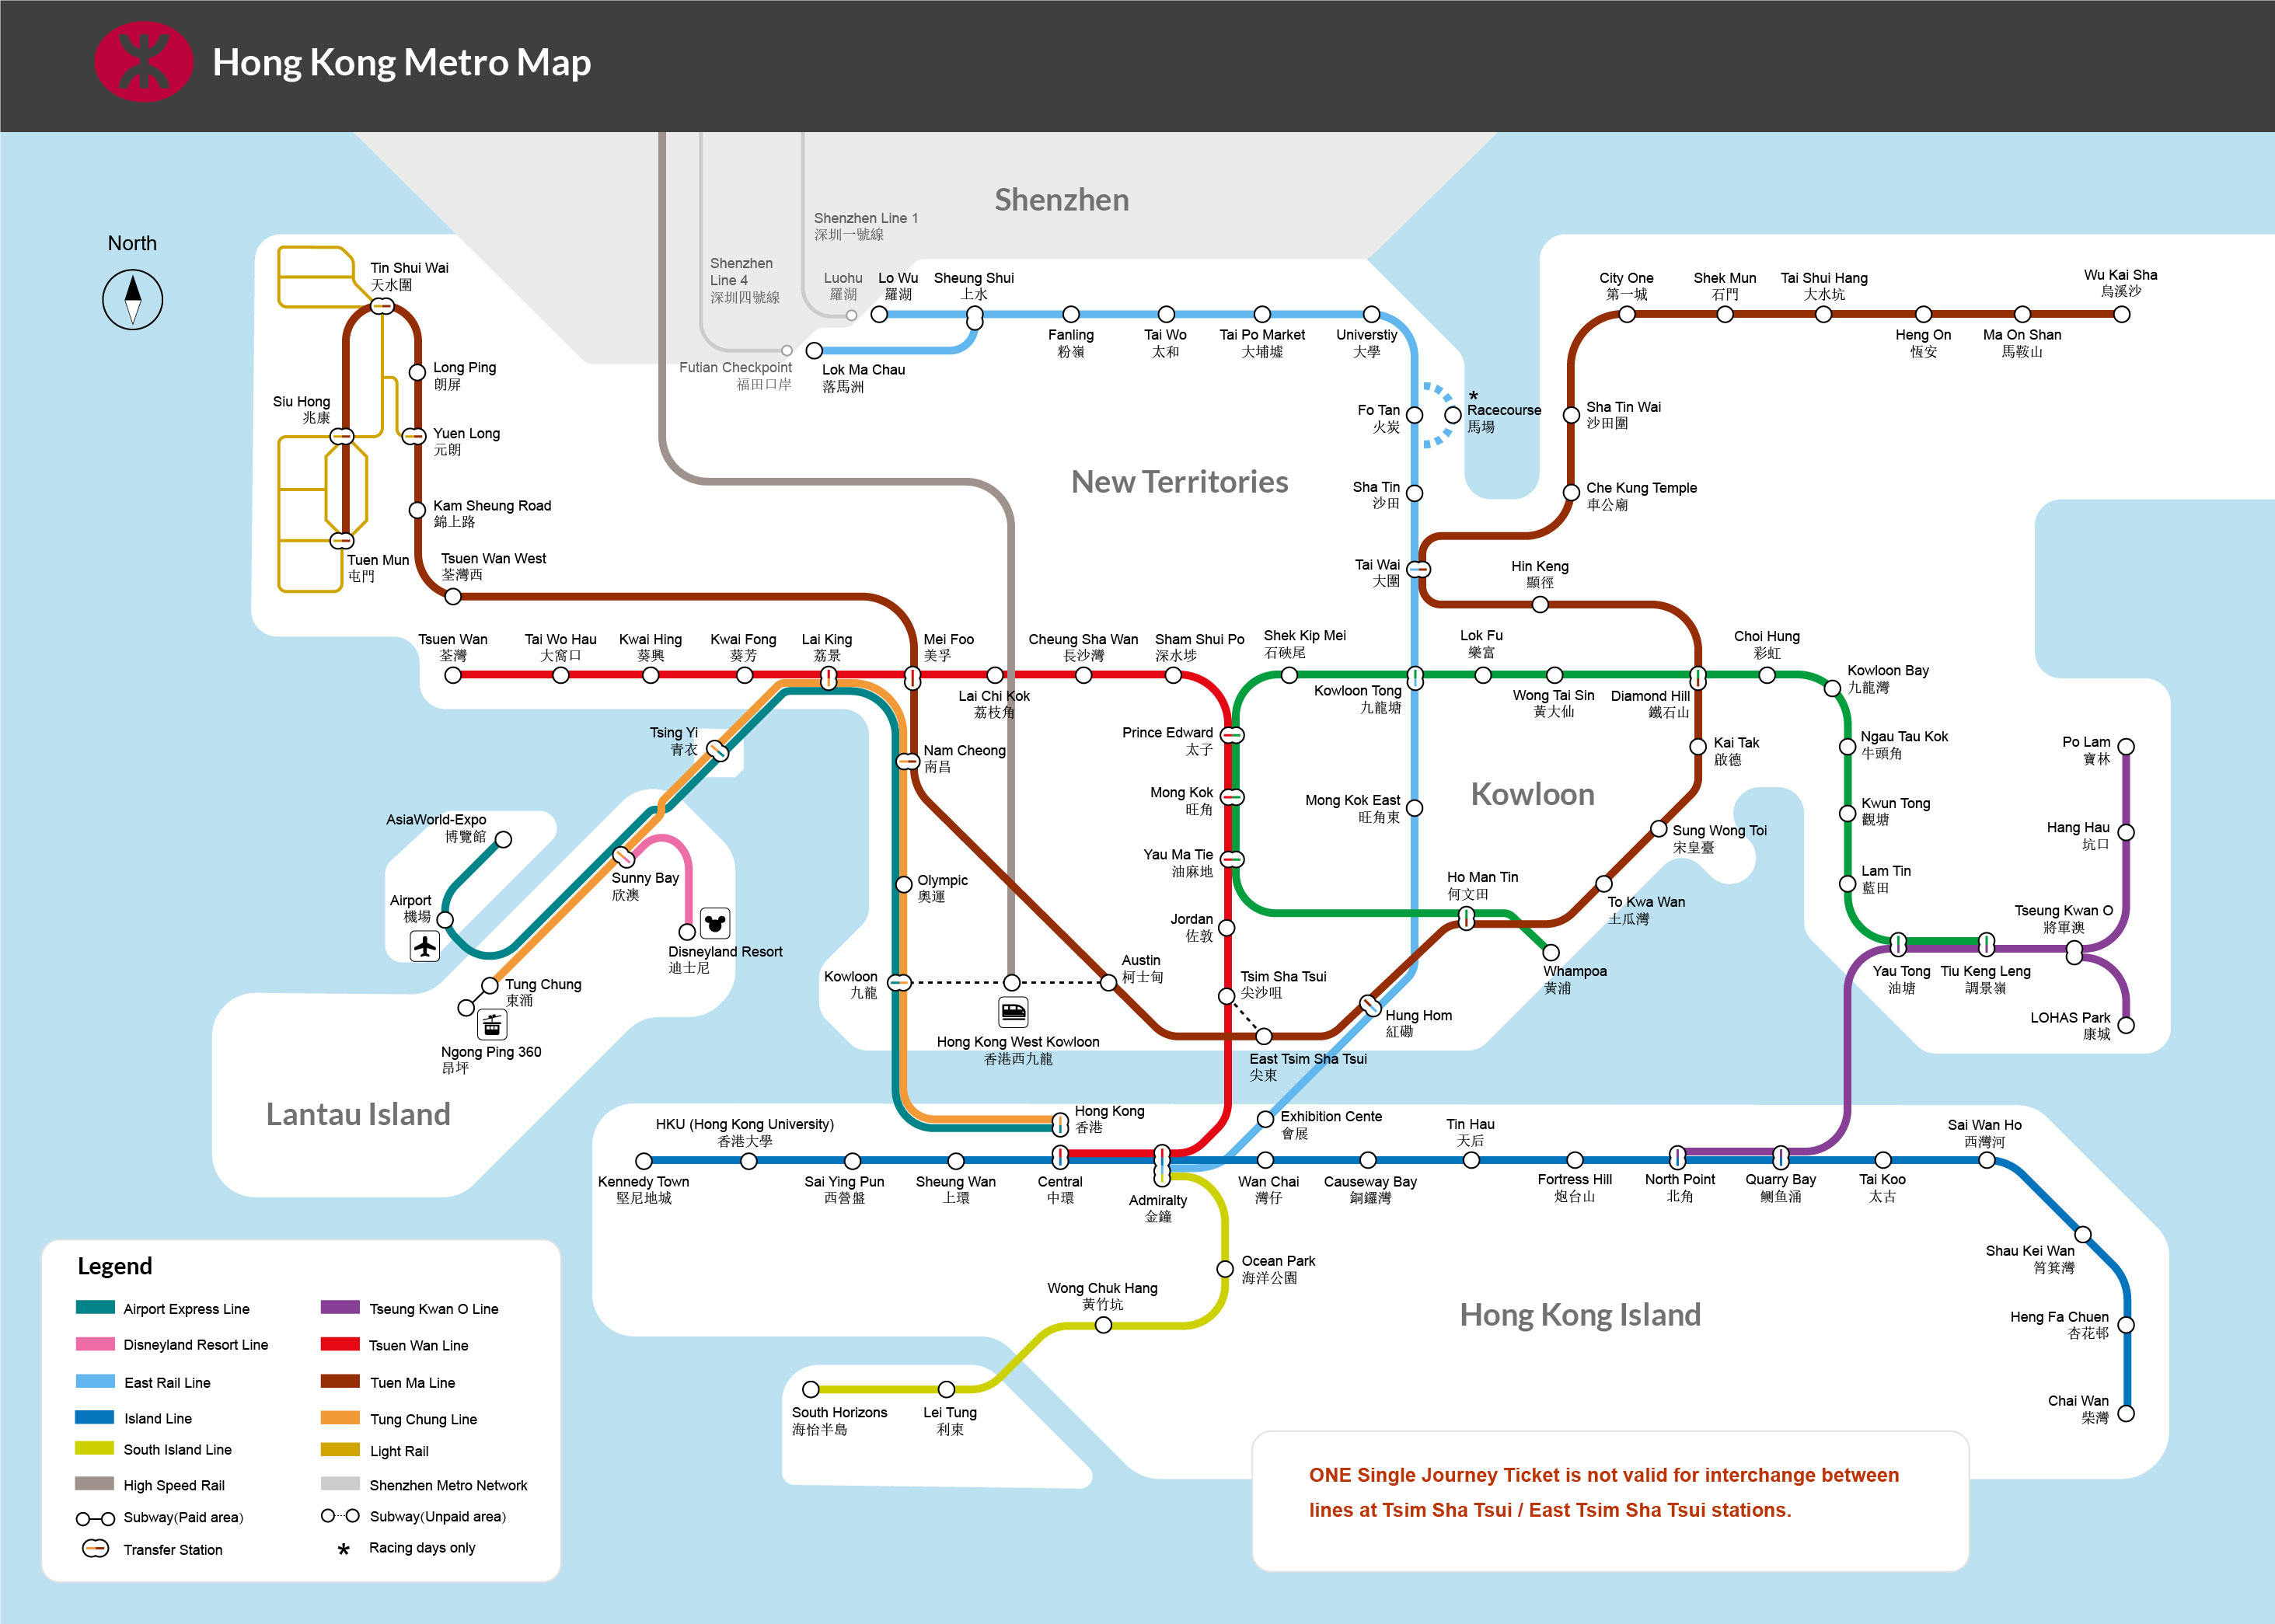 http://www.travelchinaguide.com/images/map/hongkong/metro.jpg